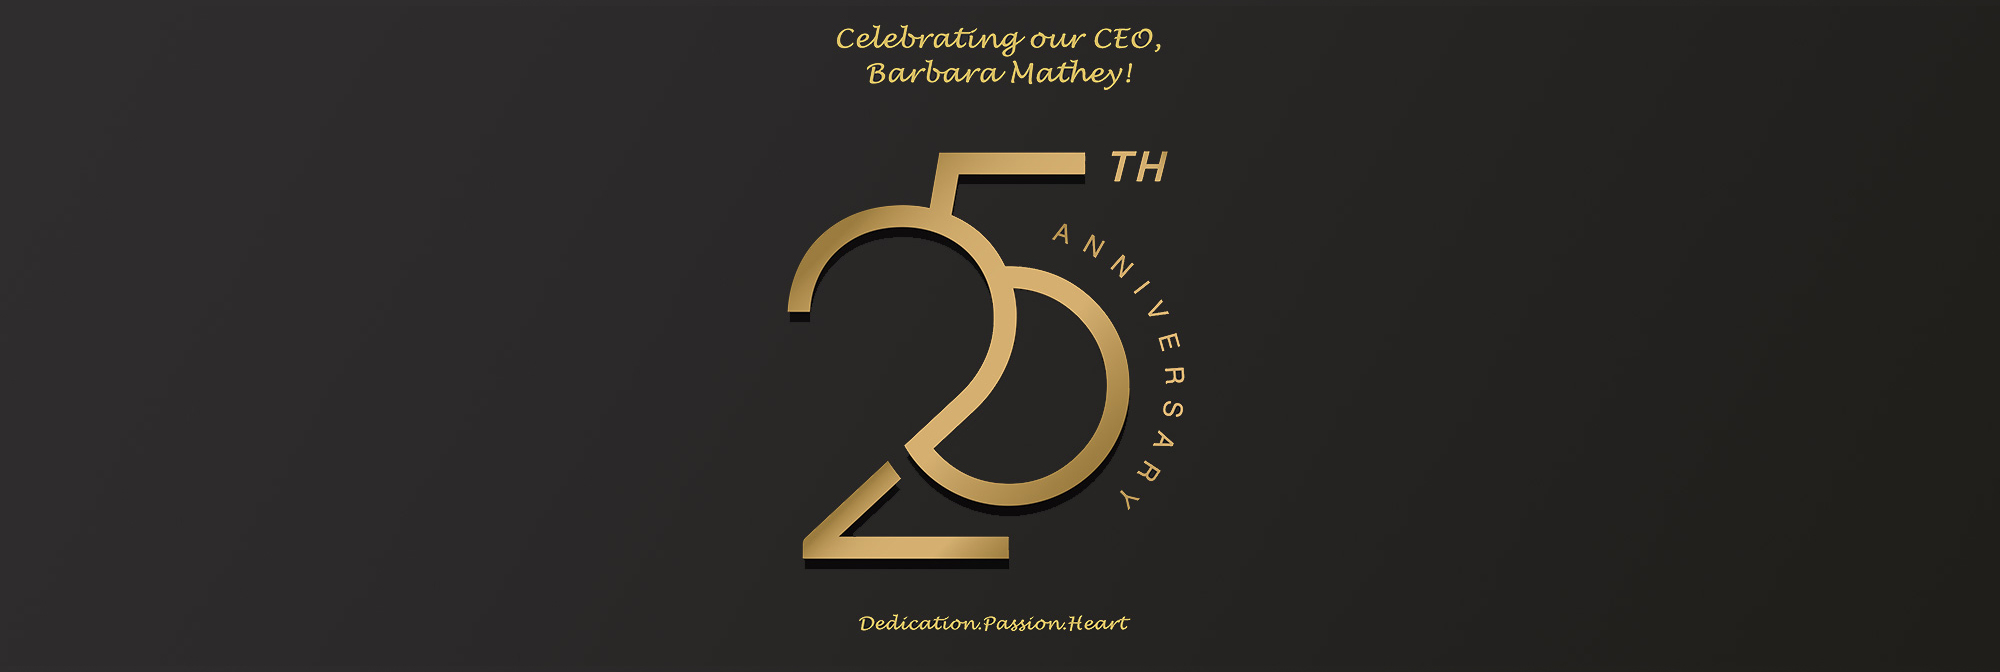 25th Anniversary of Barbara Mathey as CEO!